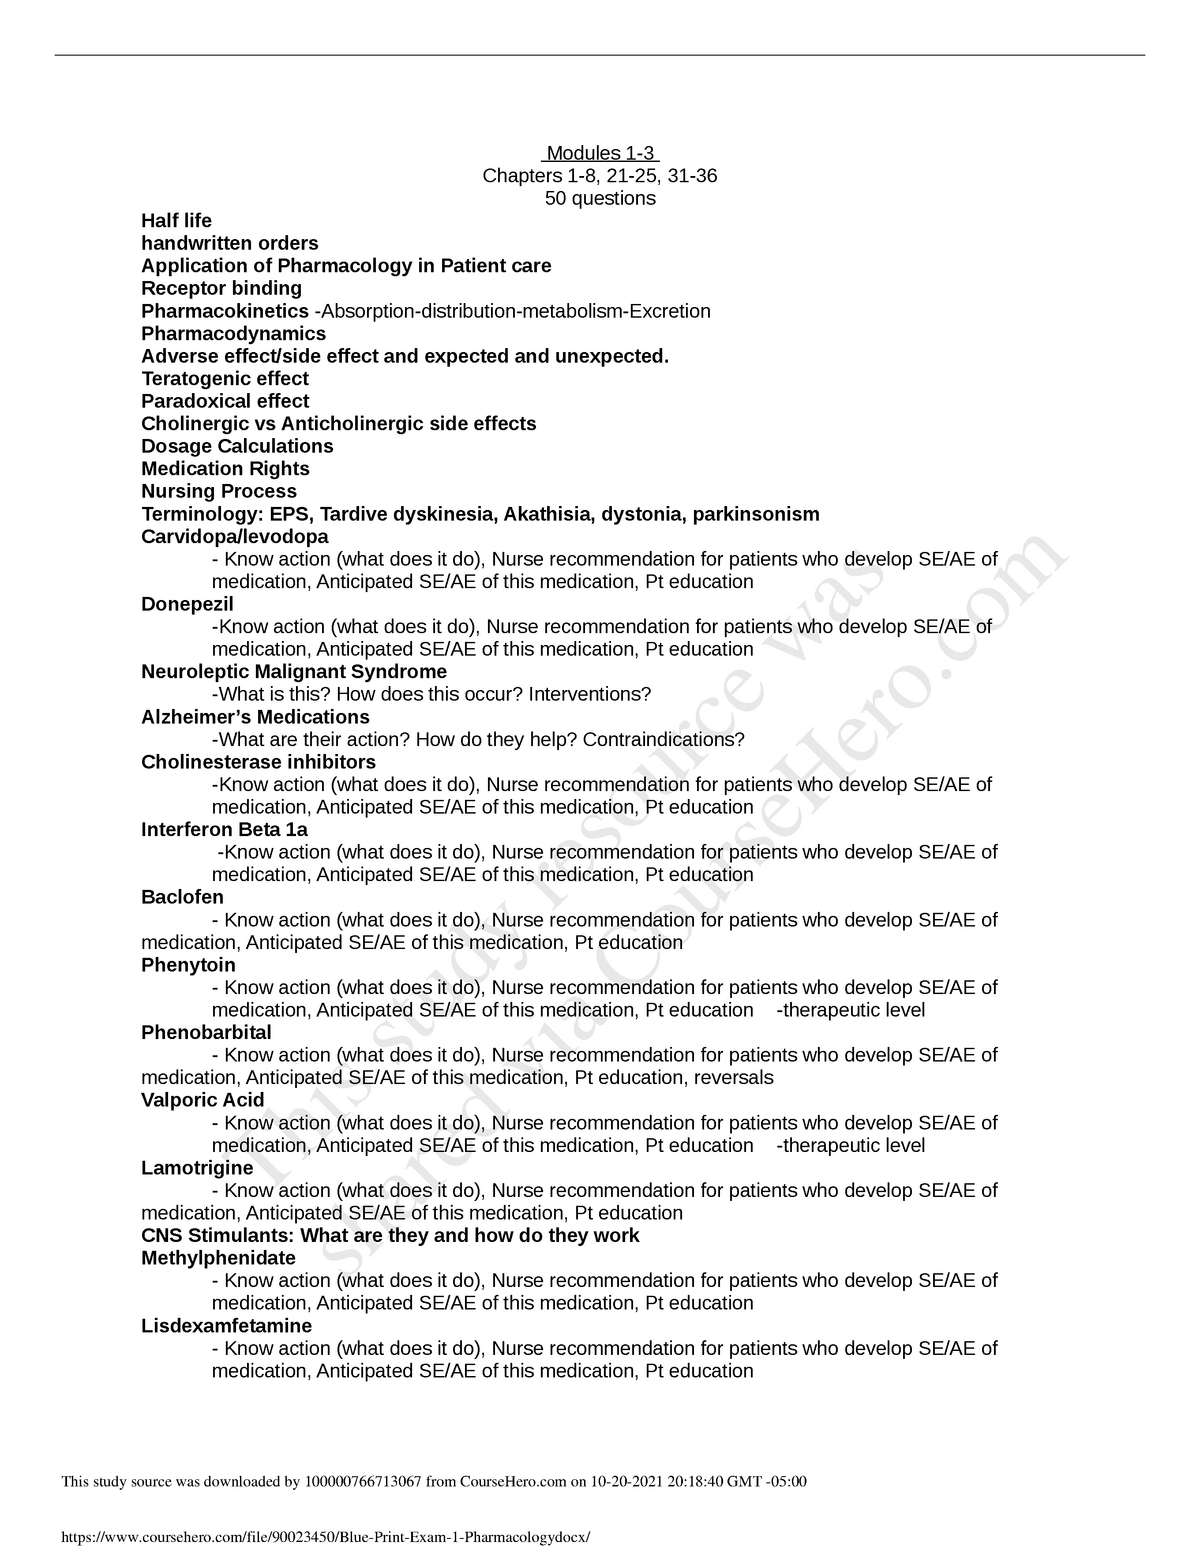 Blue Print Exam 1 Pharmacology - NUR 2407 - Studocu